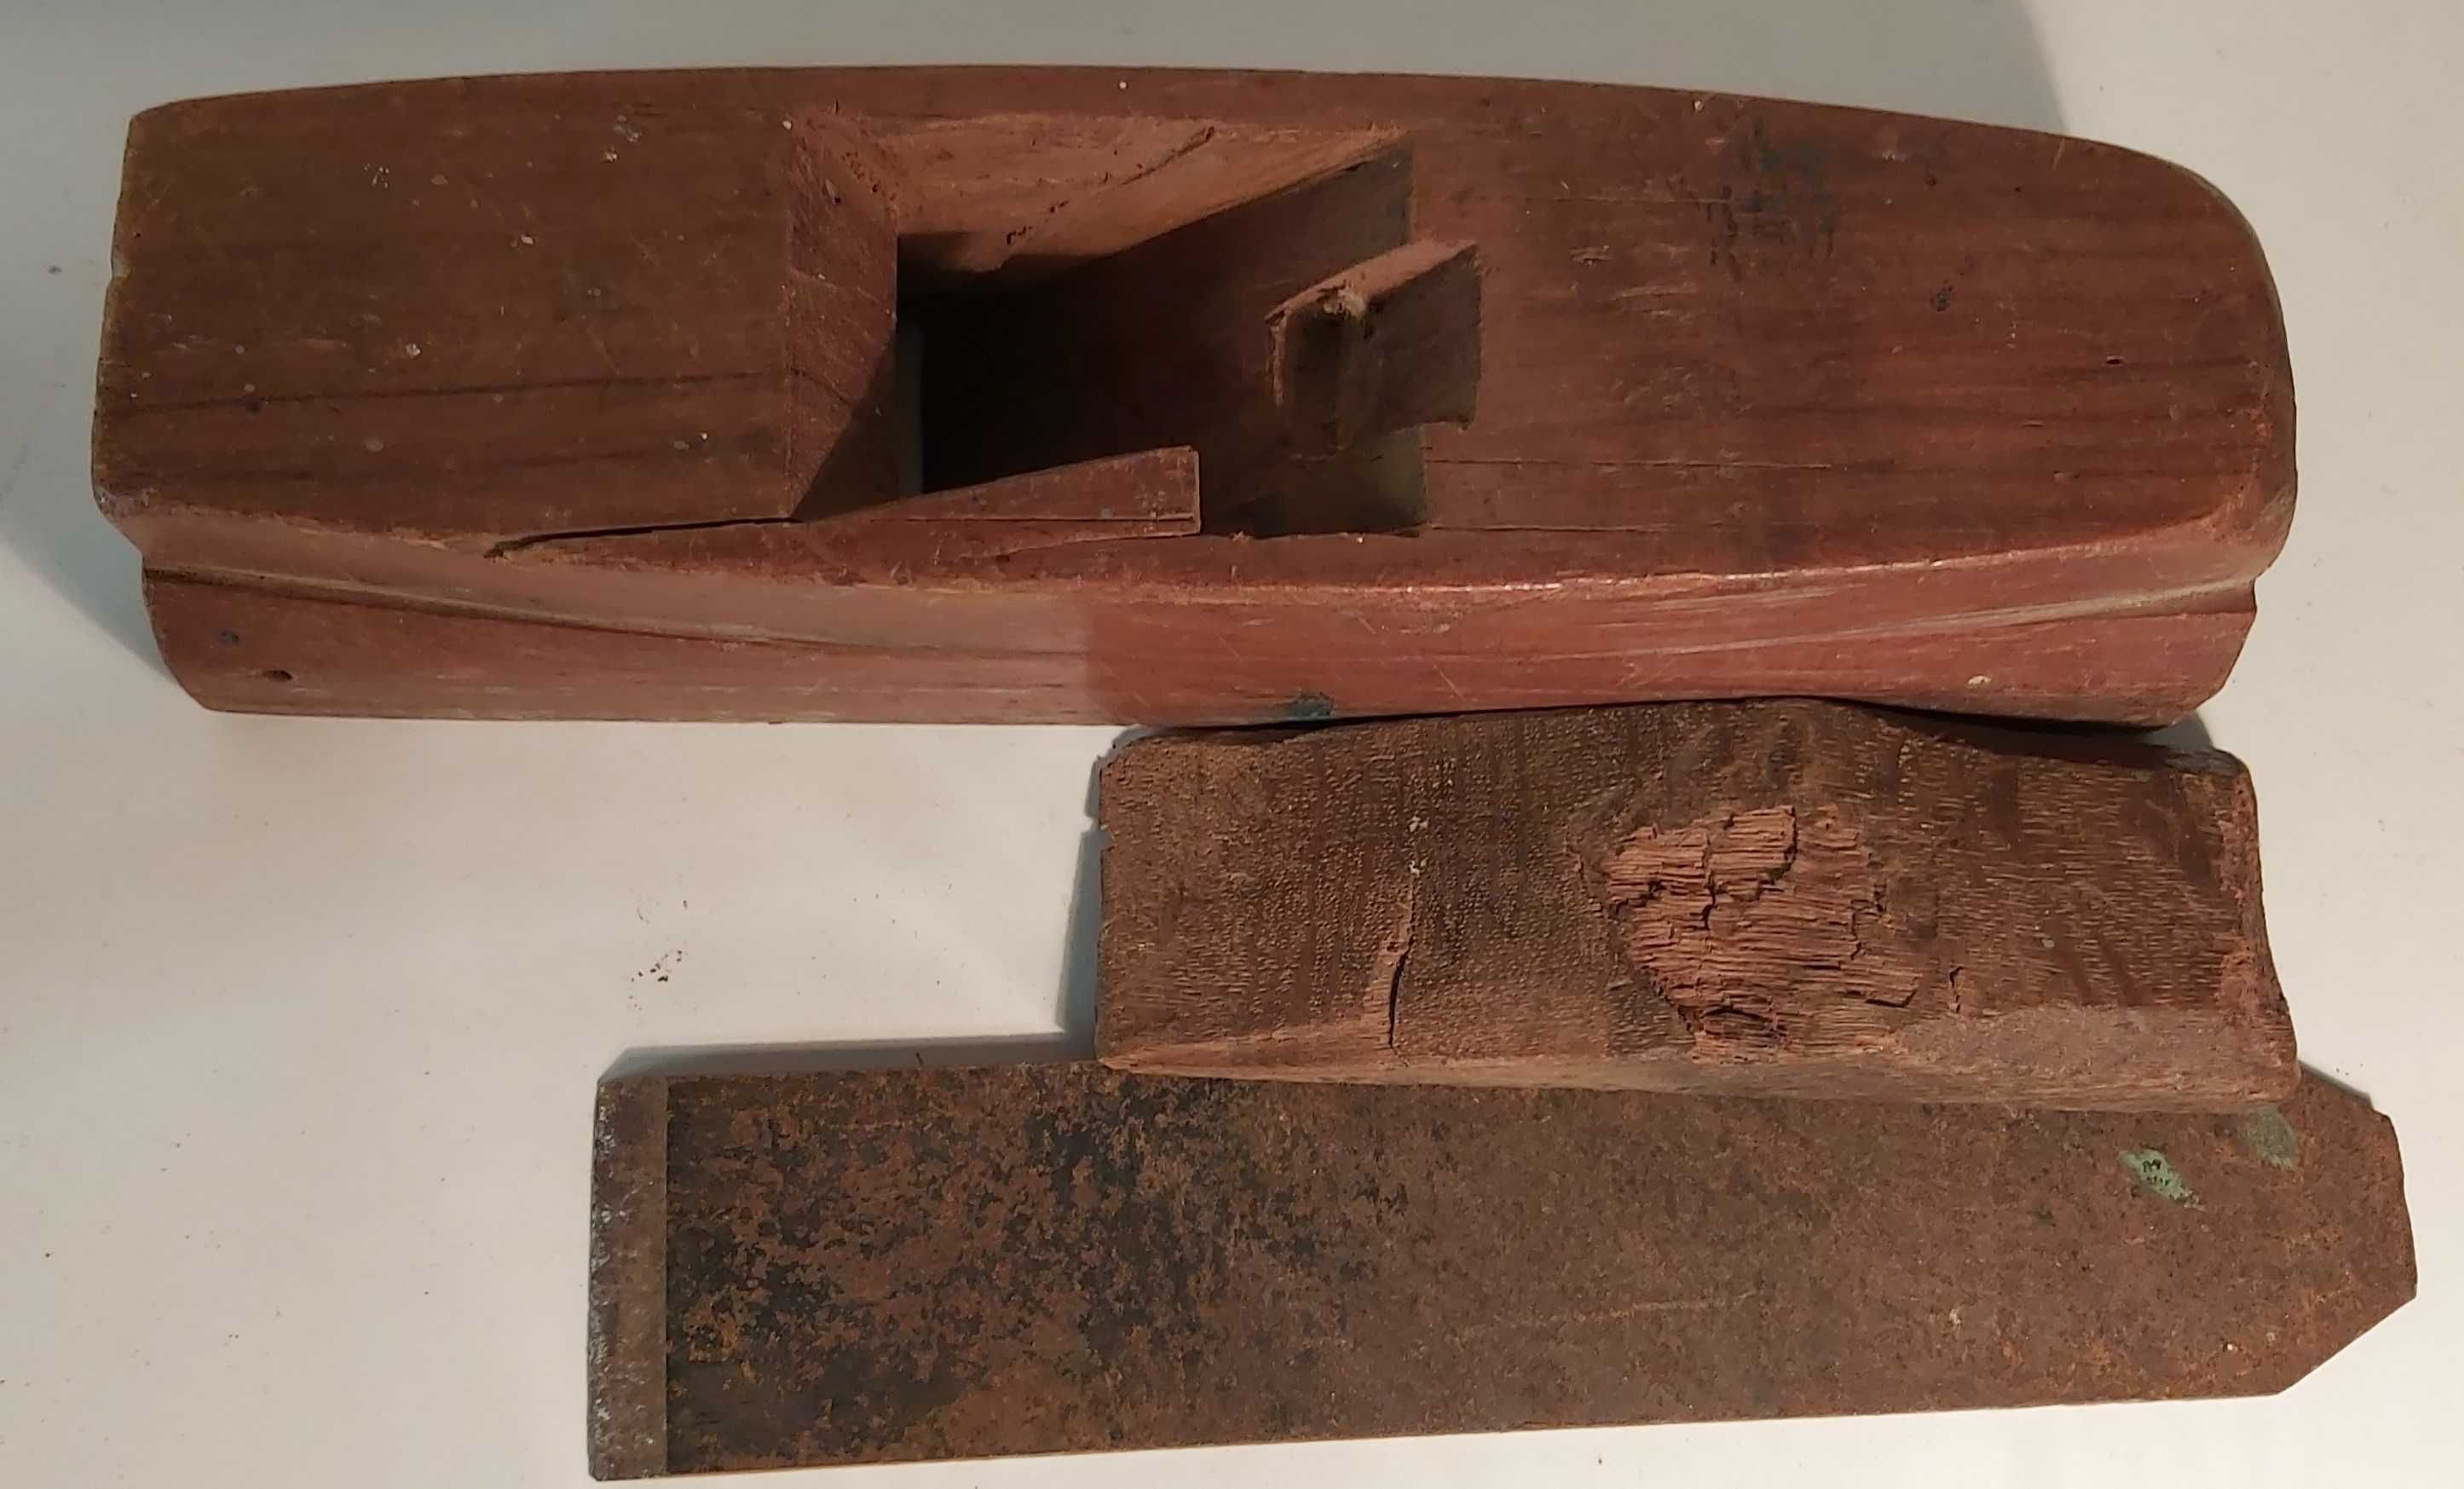 Ferramenta VINTAGE - Plaina antiga madeira